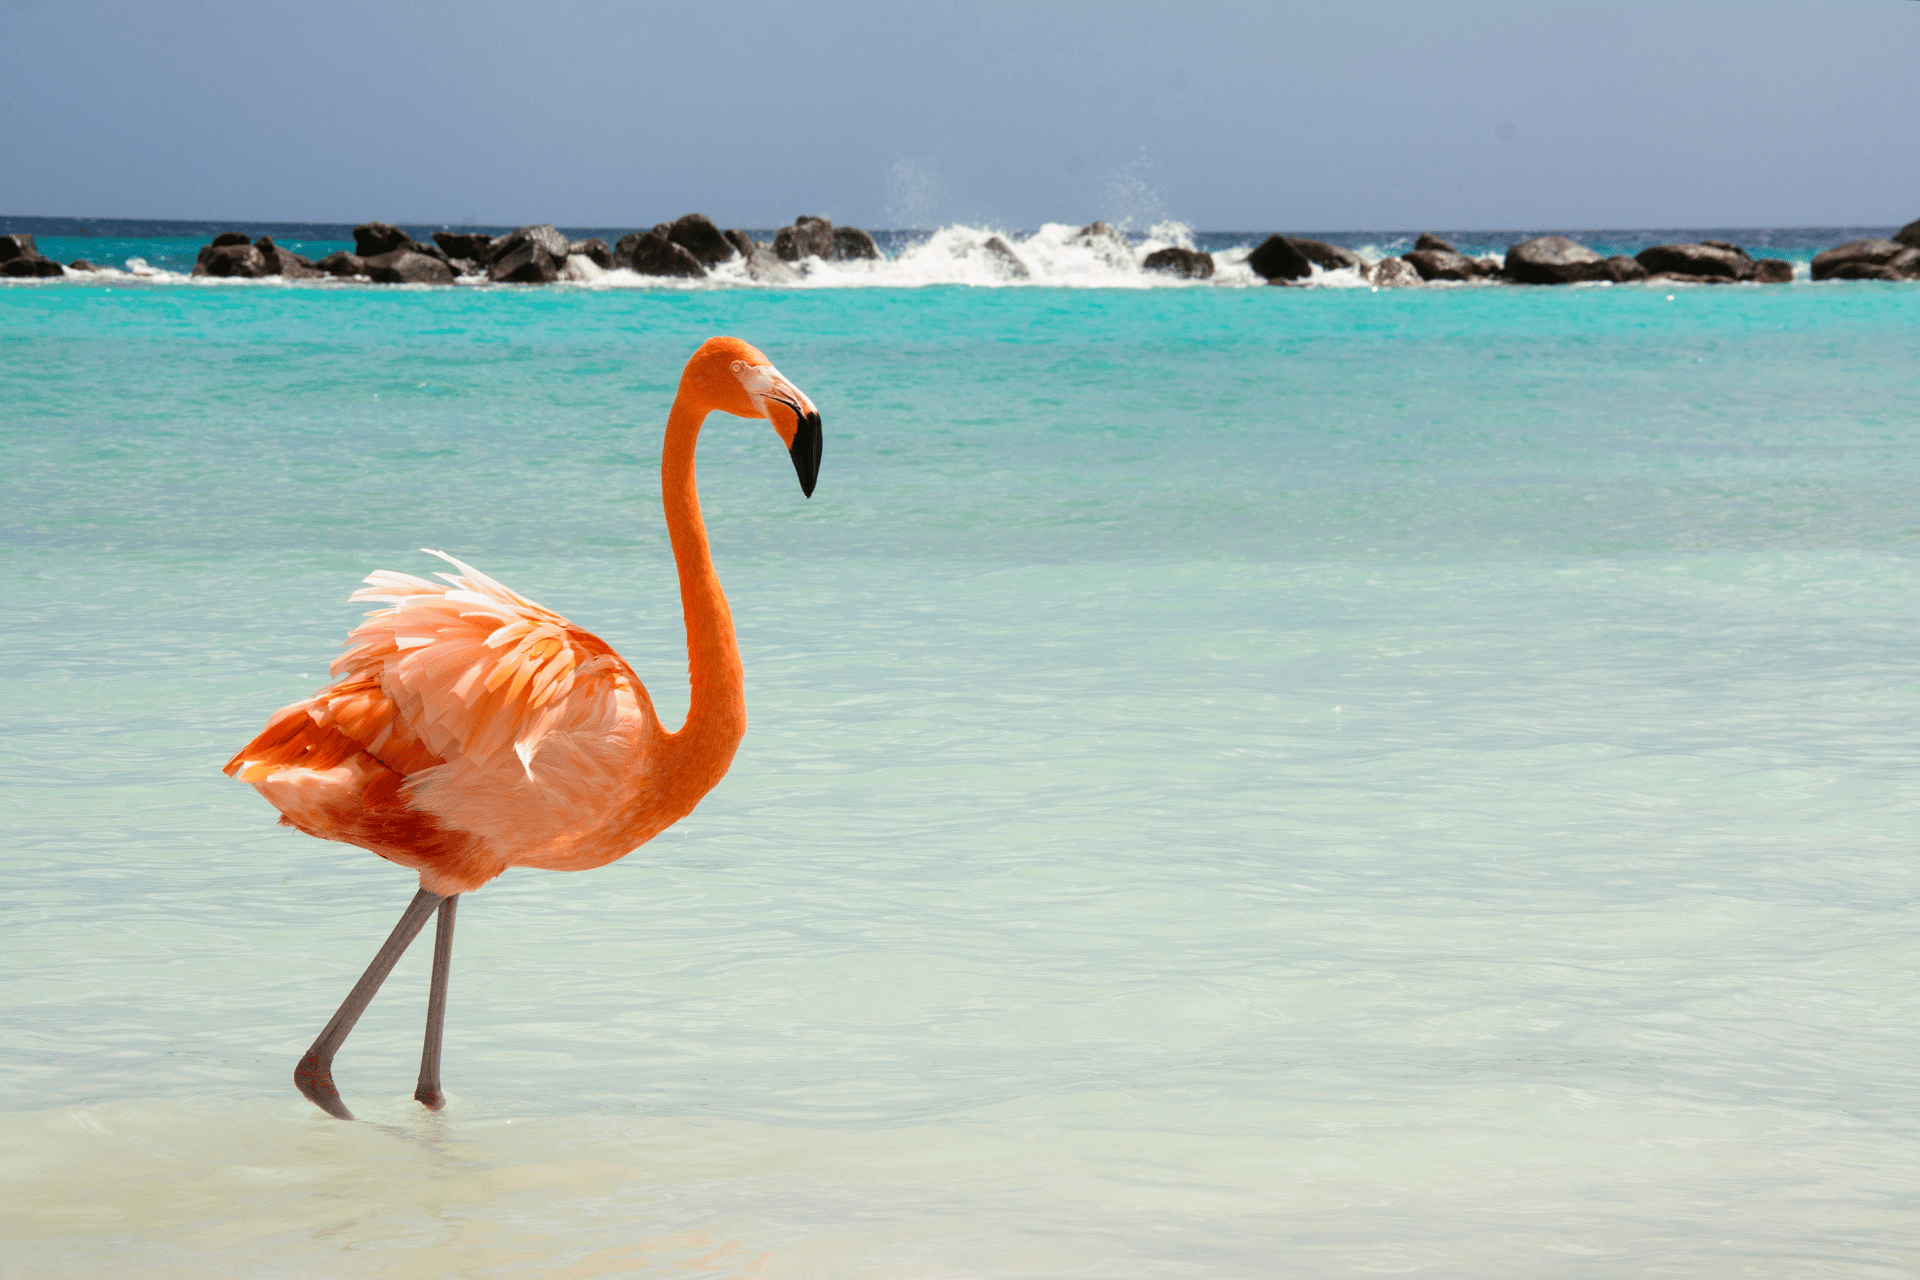 A flamingo on the beach of Aruba